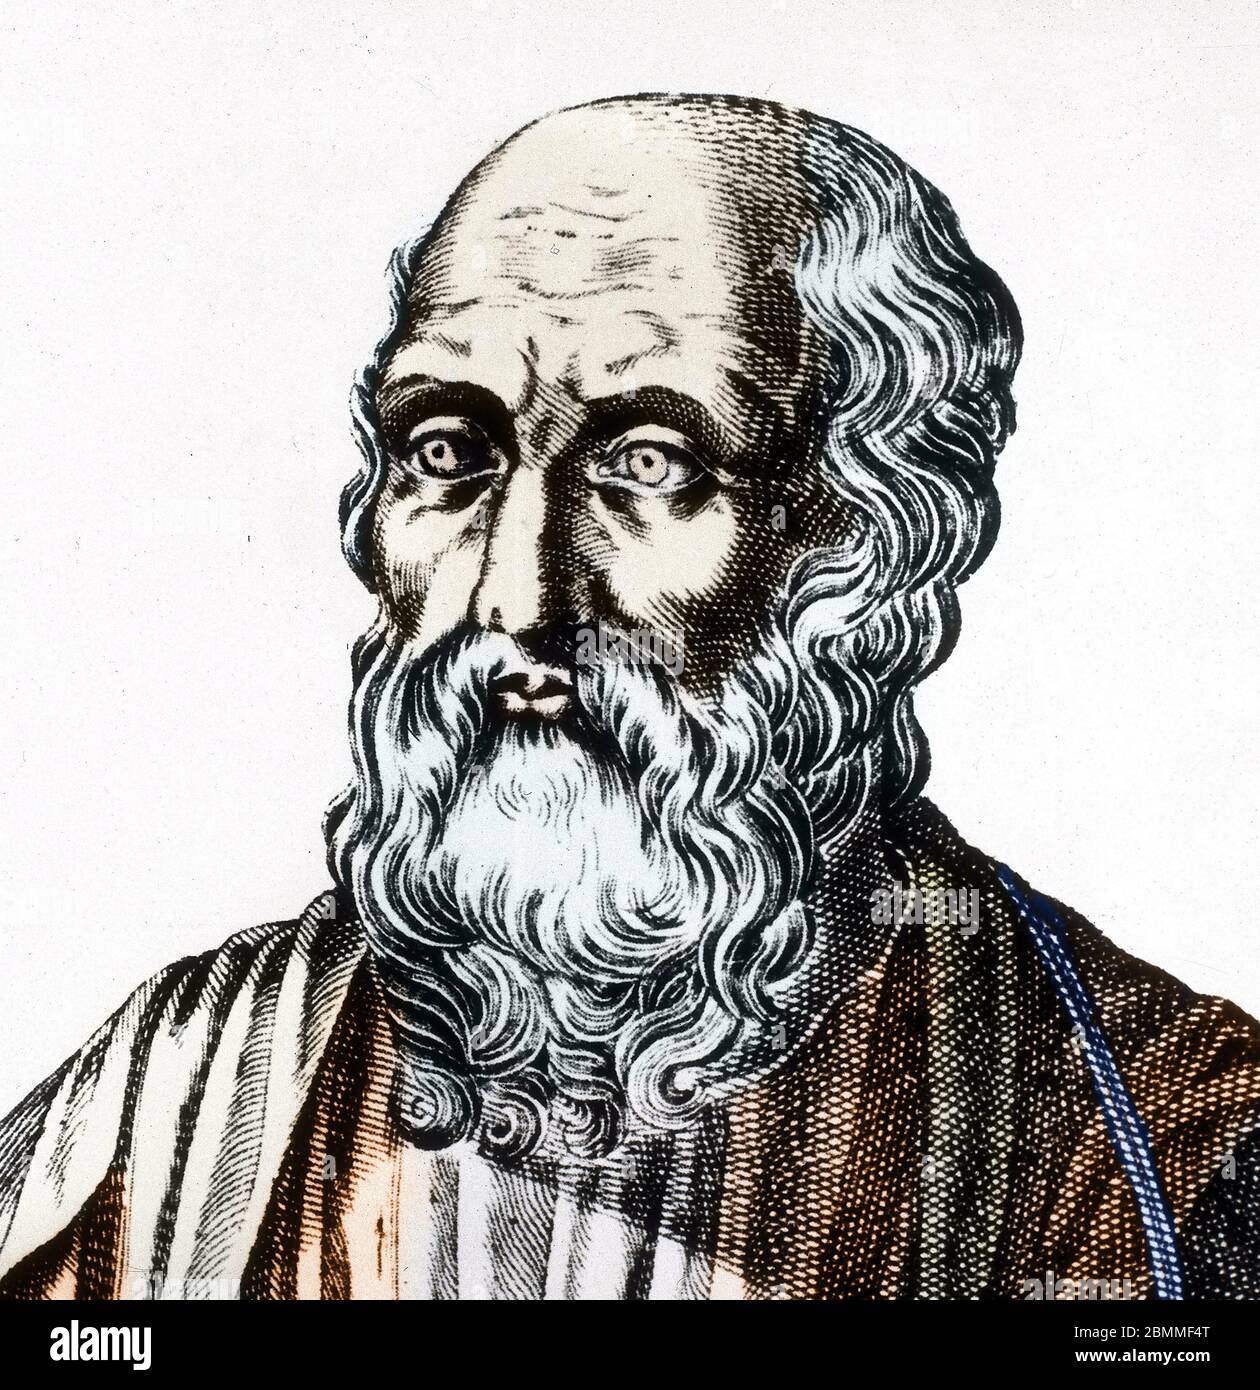 Portrait du philosophe grec Platon (428-348 avant JC) - Greek philosopher Plato - Gravure - Collection privee Stock Photo